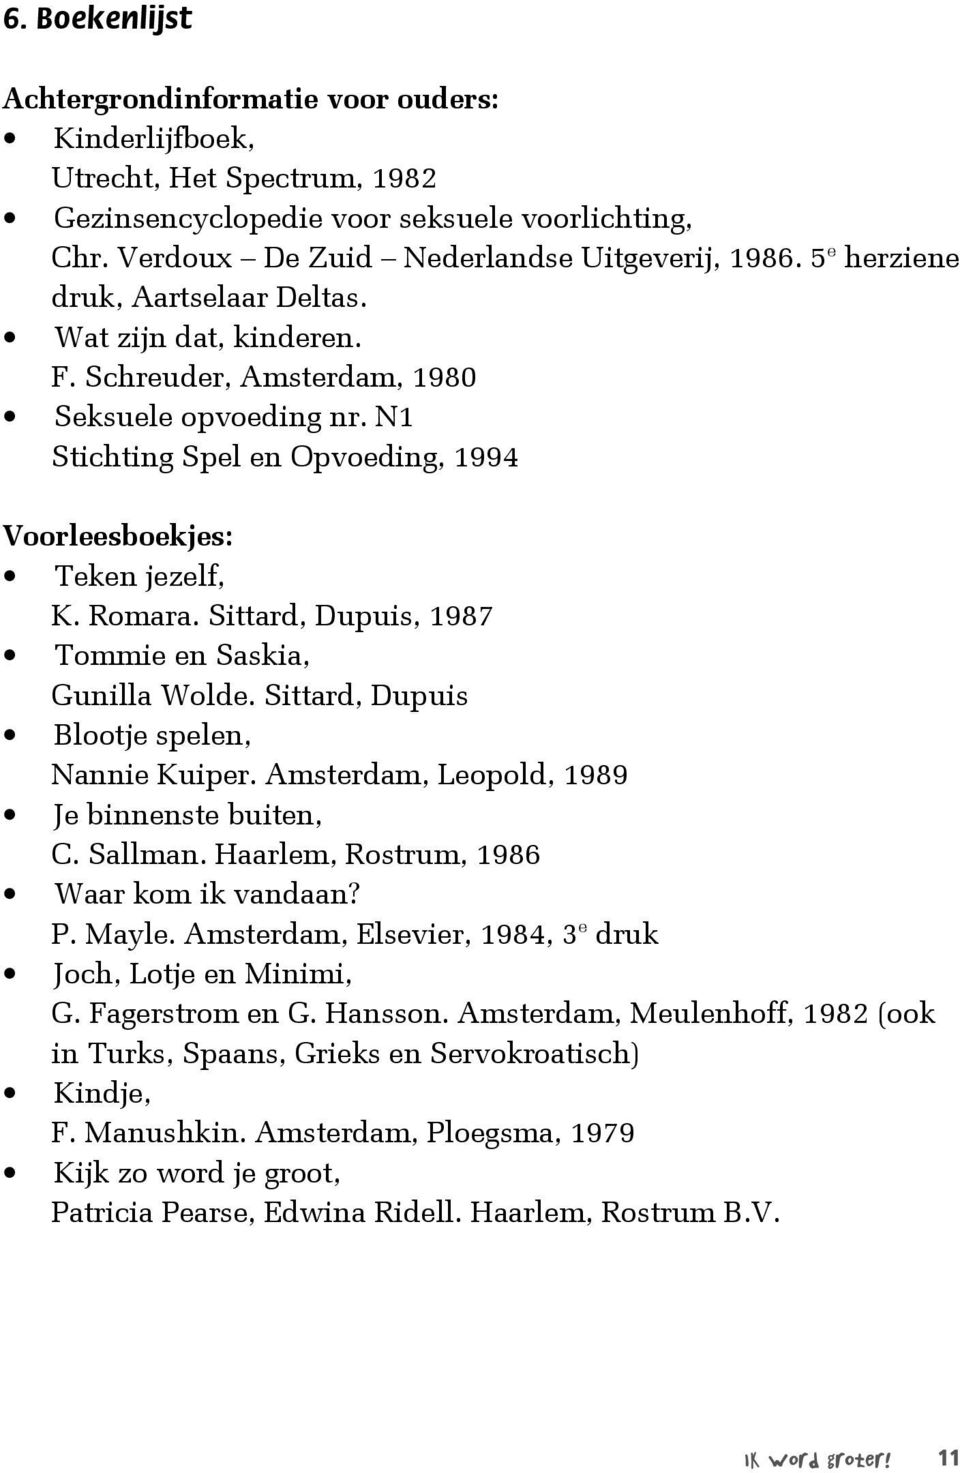 Sittard, Dupuis, 1987 Tommie en Saskia, Gunilla Wolde. Sittard, Dupuis Blootje spelen, Nannie Kuiper. Amsterdam, Leopold, 1989 Je binnenste buiten, C. Sallman.